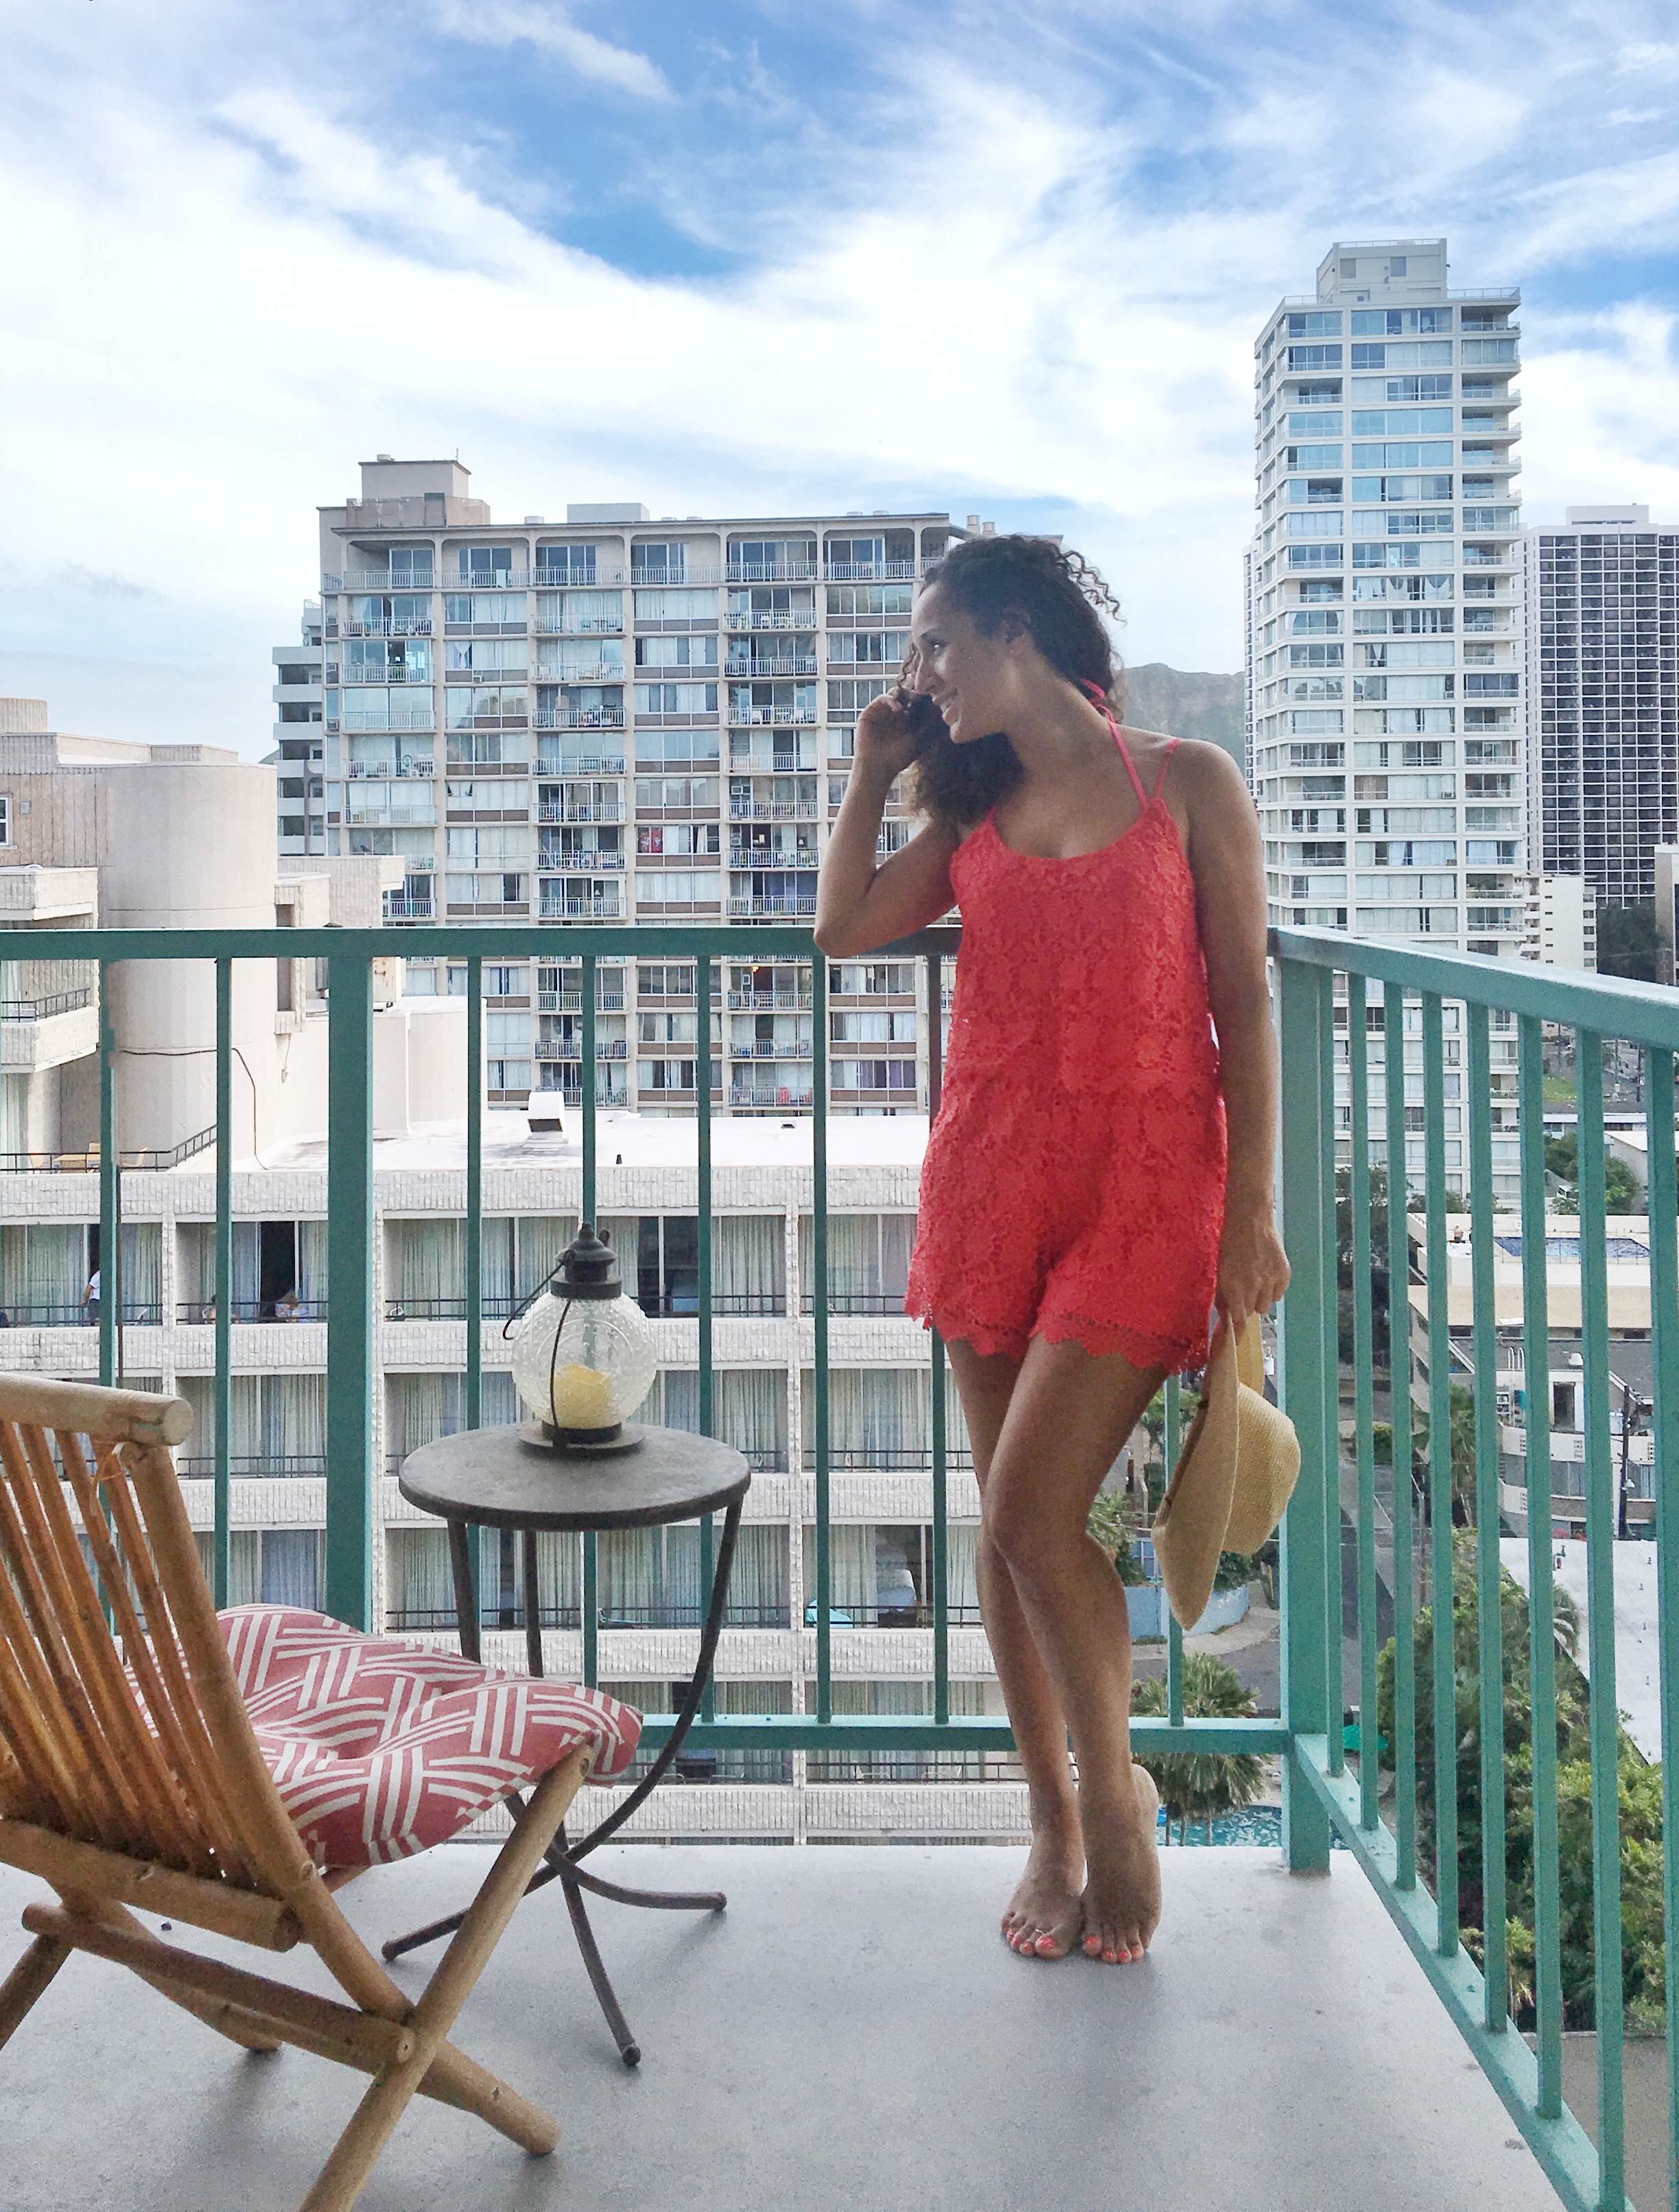 Overlooking Waikiki, Hawaii from the condo balcony